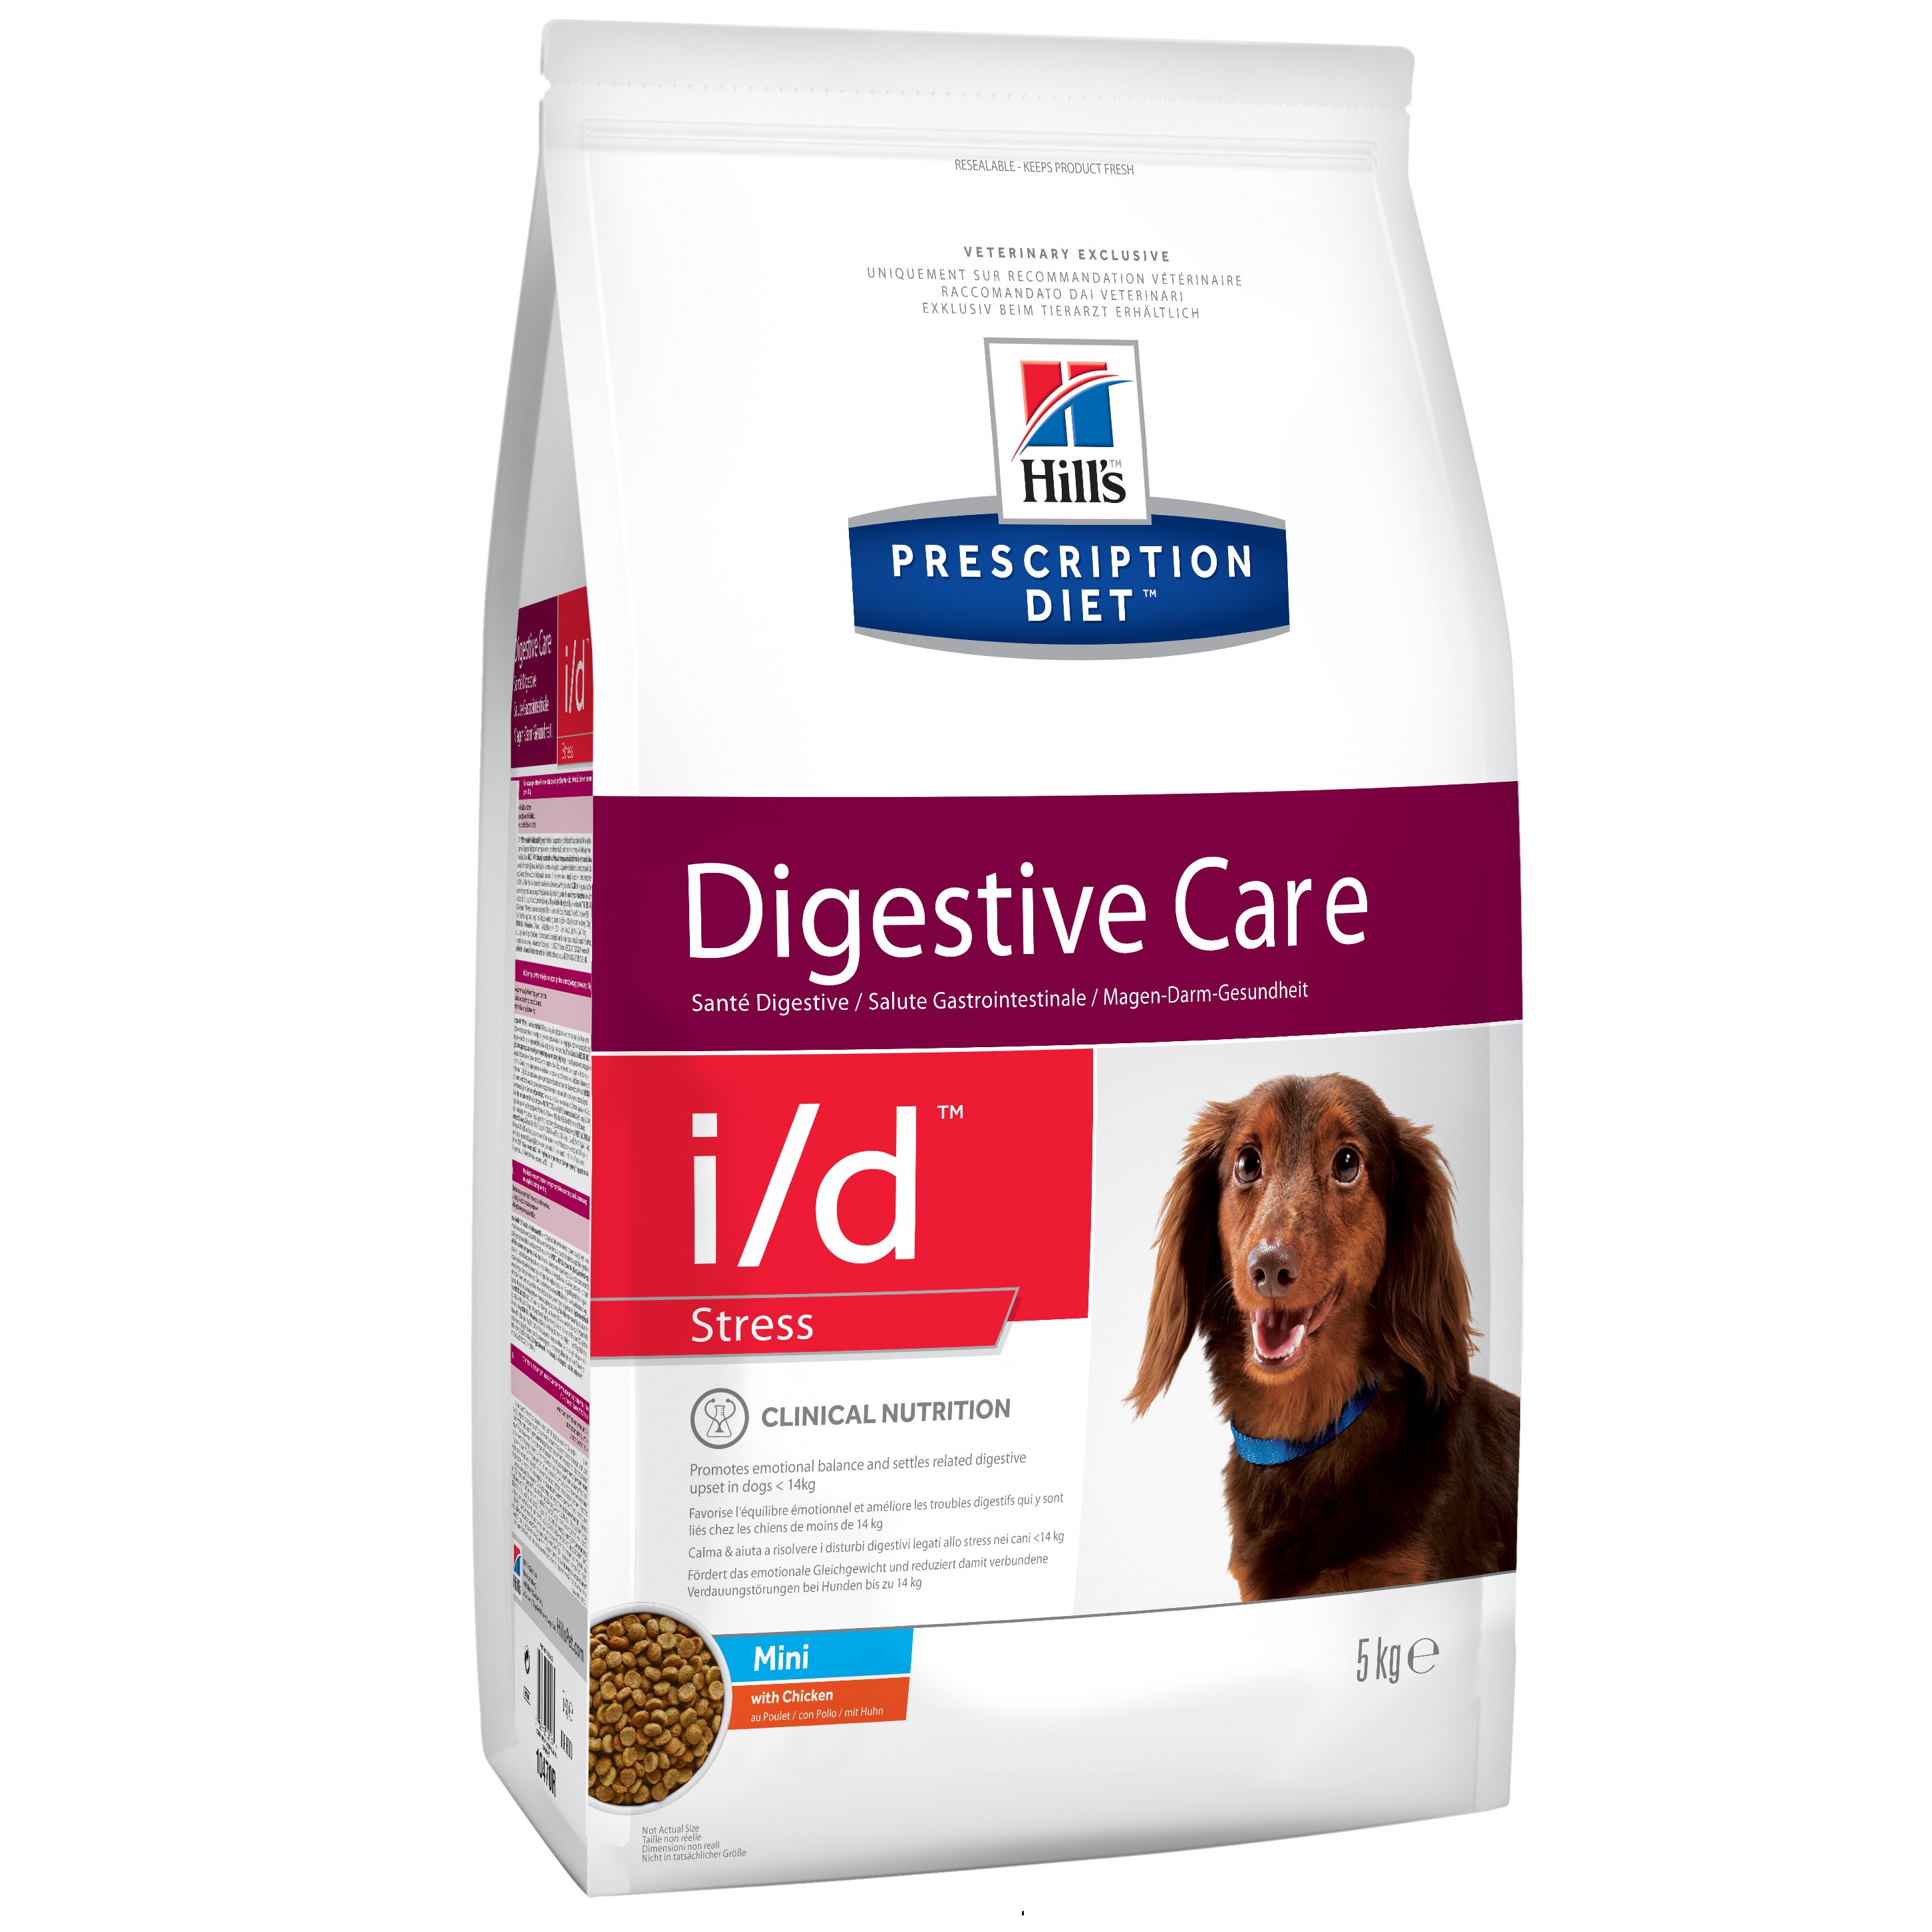 Корм для собак 1st. Hill's Prescription Diet для собак. Хиллс сух д/собак i/d ЖКТ стресс мини 1,5 кг. Hill's Prescription Diet i/d stress Mini. Hills Digestive Care i/d для собак.